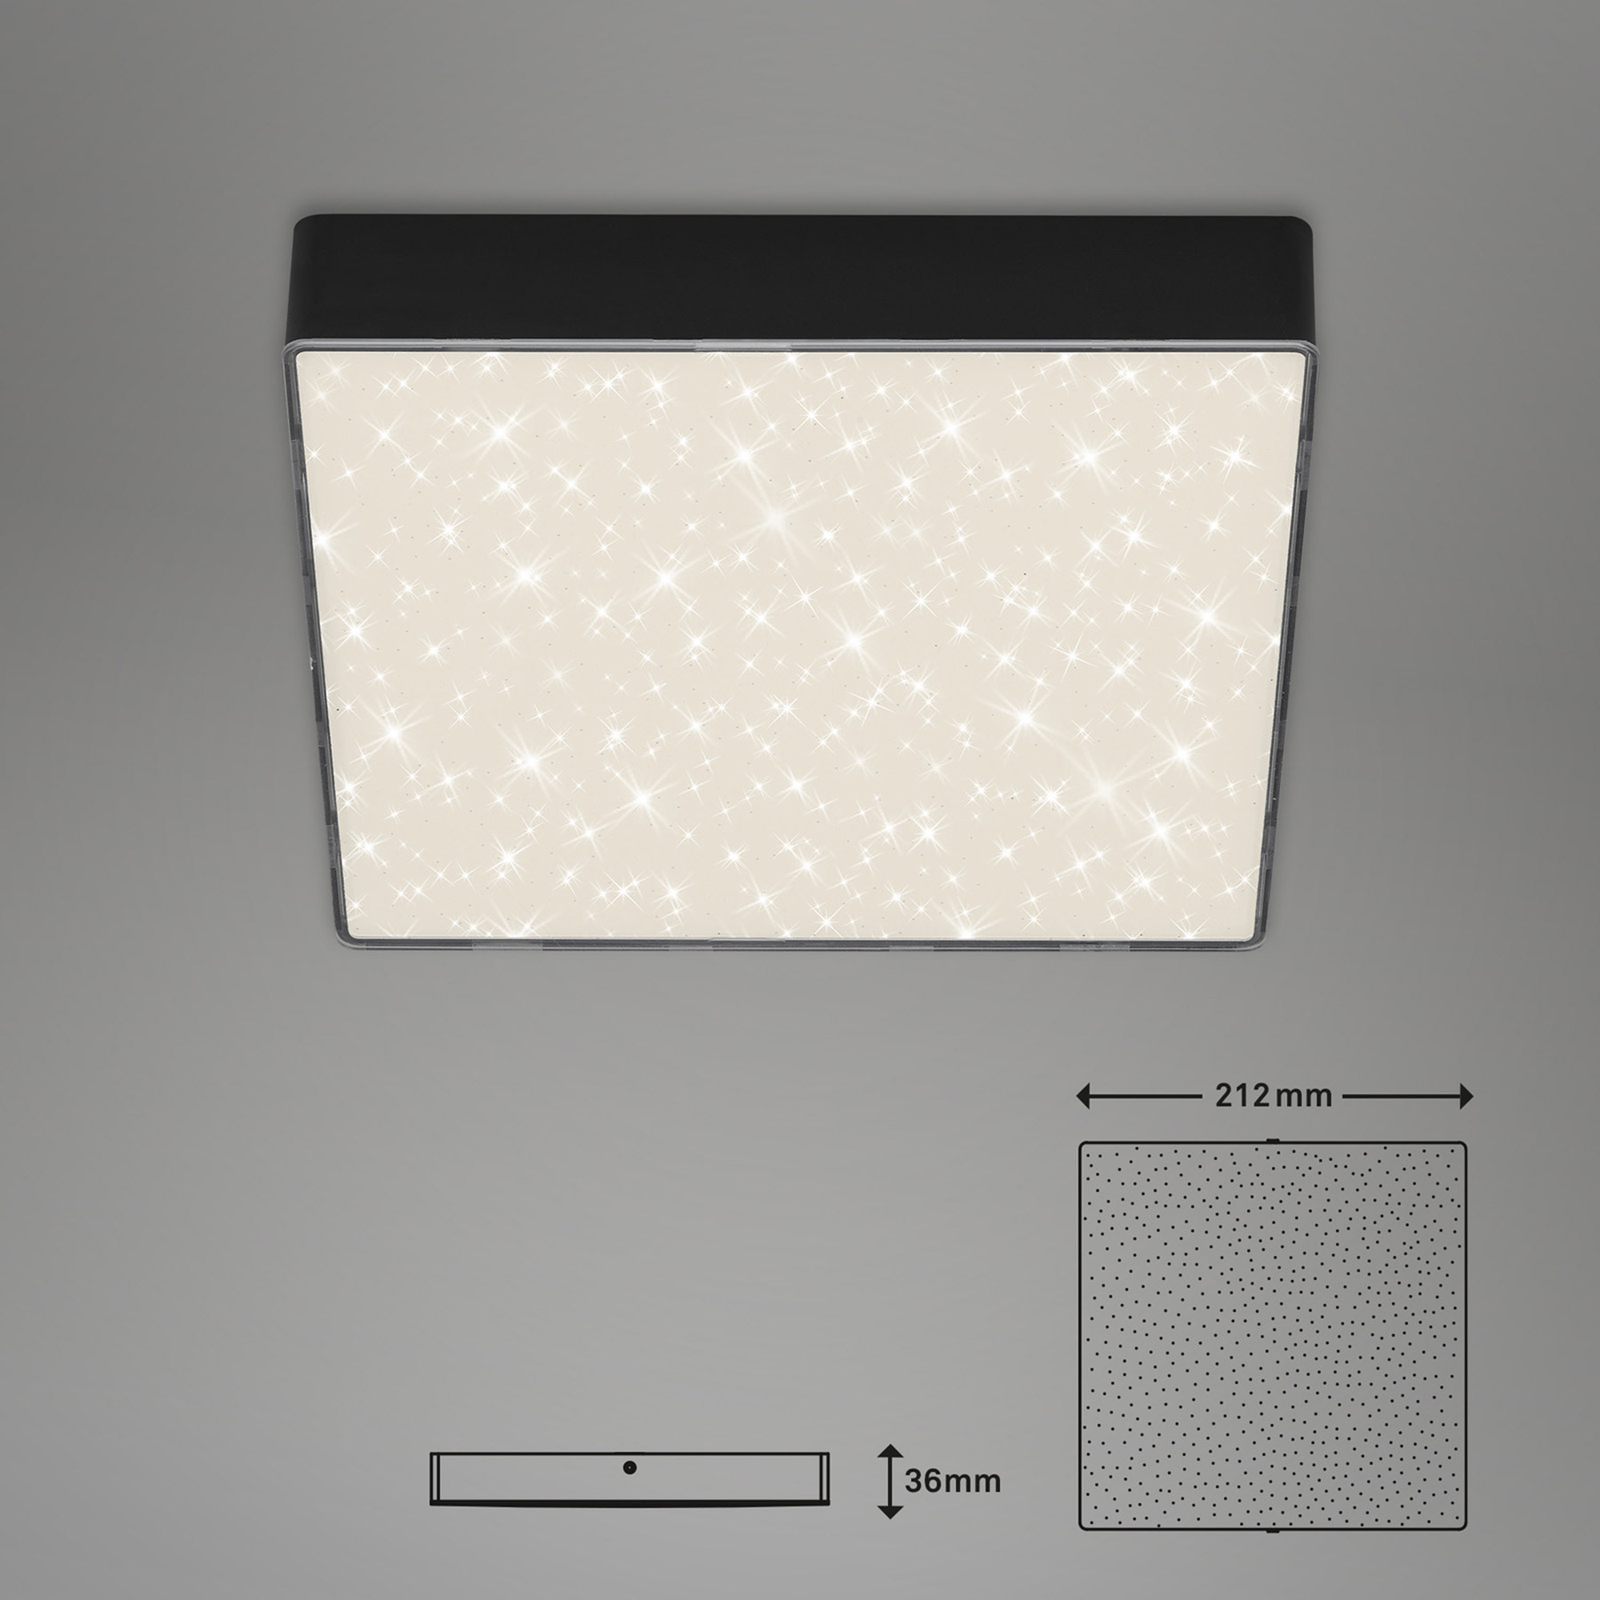 LED-taklampe Flame Star, 21,2 x 21,2 cm, svart